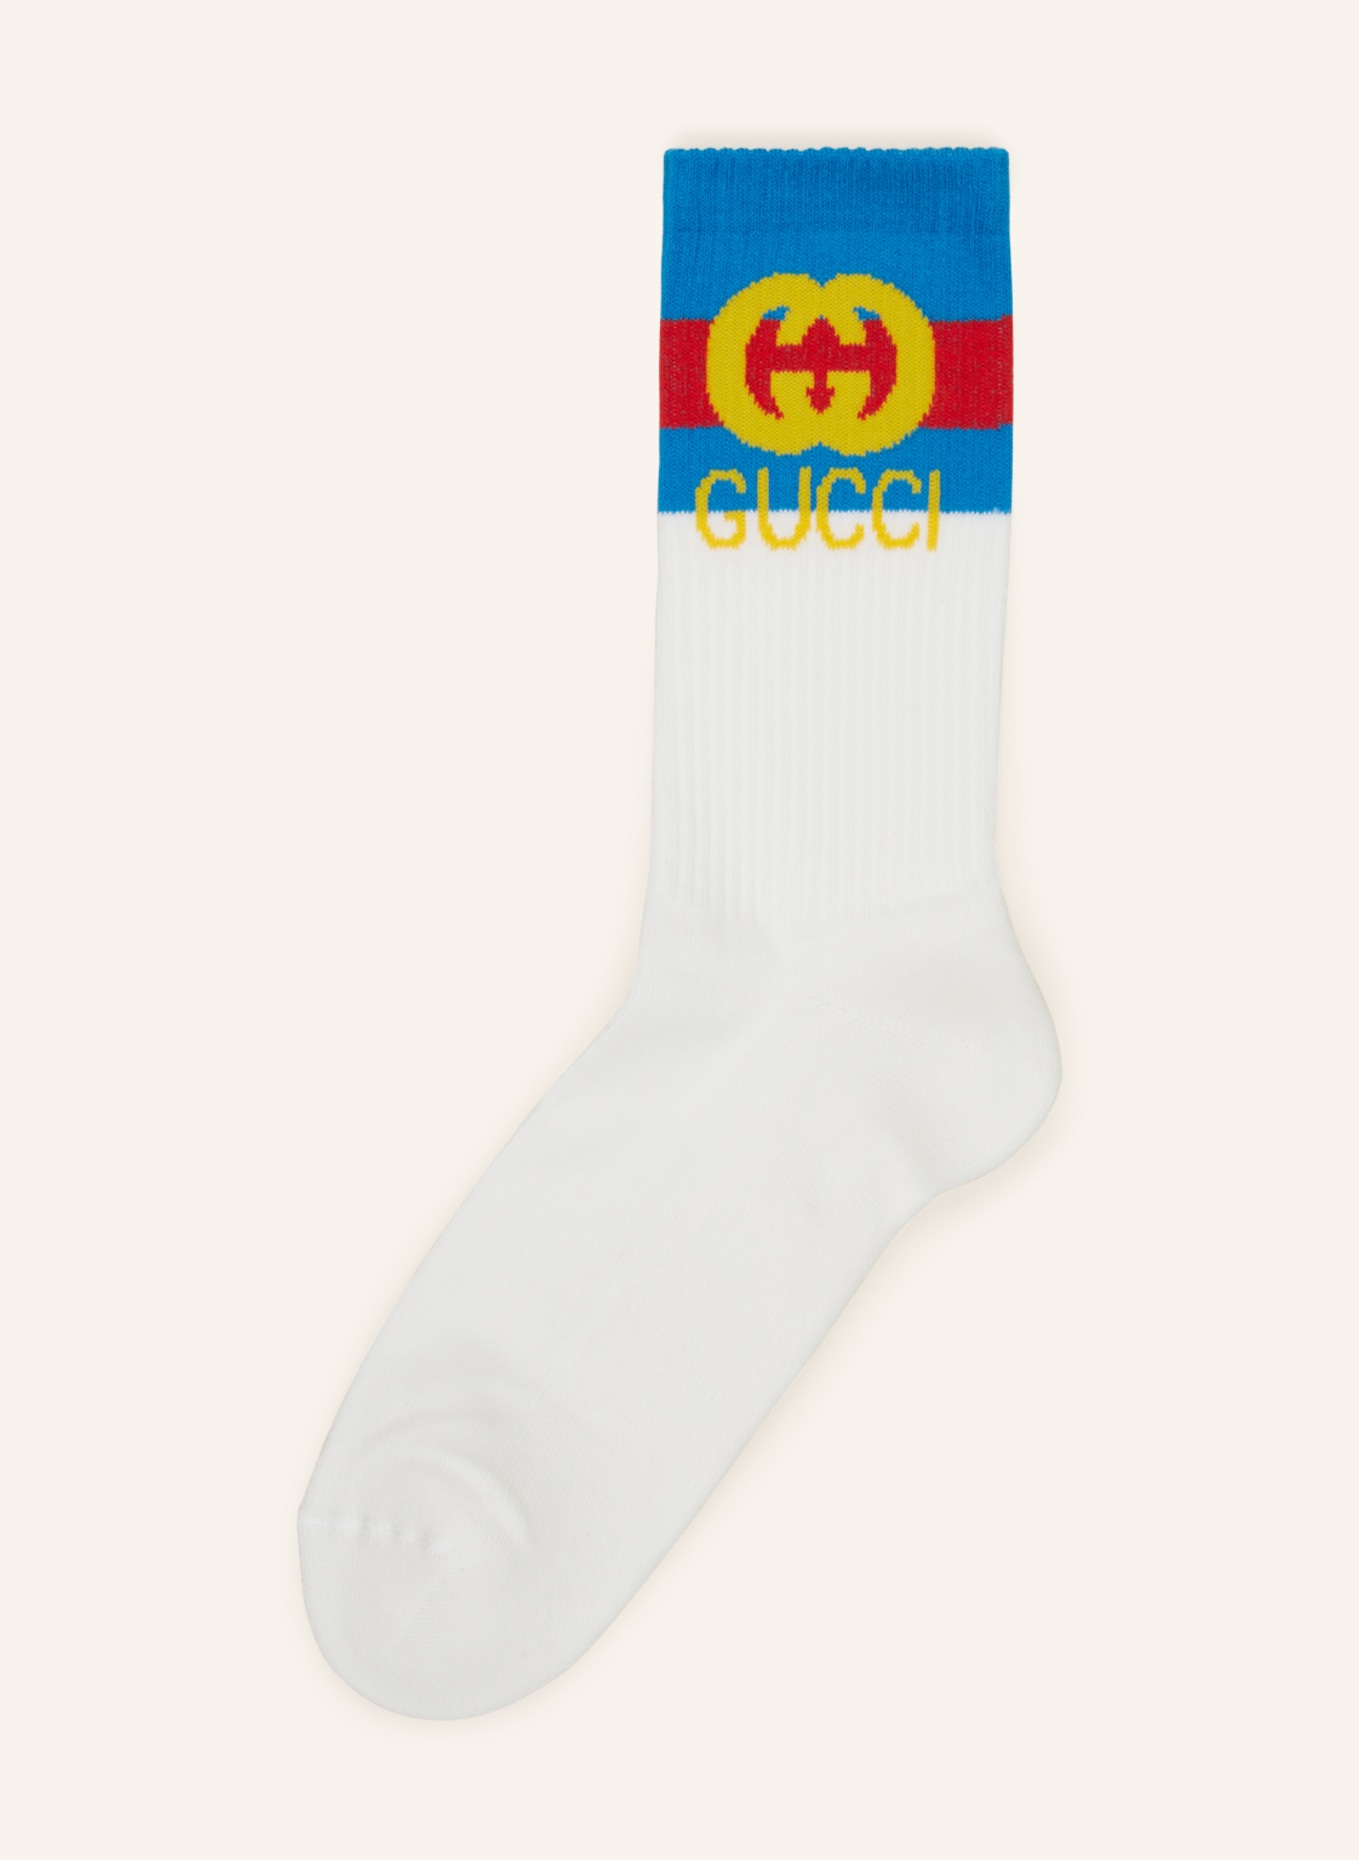 GUCCI Socken, Farbe: WEISS/ BLAU/ GELB (Bild 1)